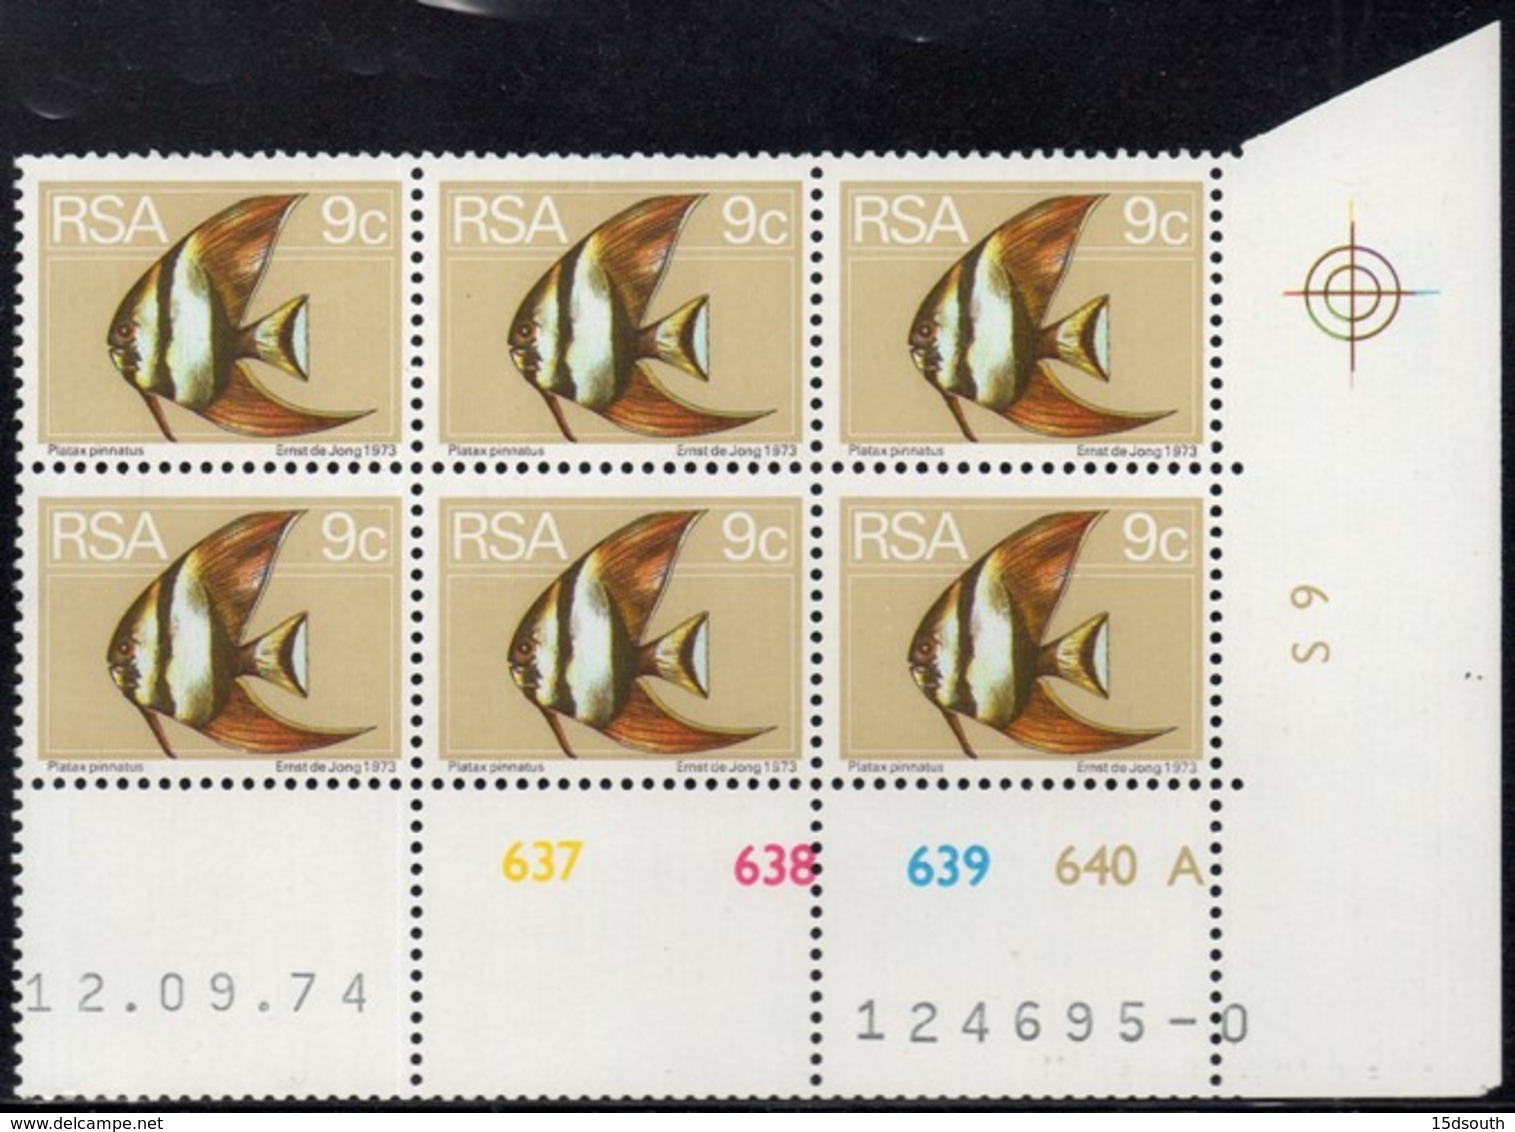 South Africa - 1974 2nd Definitive 9c Angel Fish Control Block (1974.09.12) Pane A (**) # SG 355 - Blocks & Sheetlets